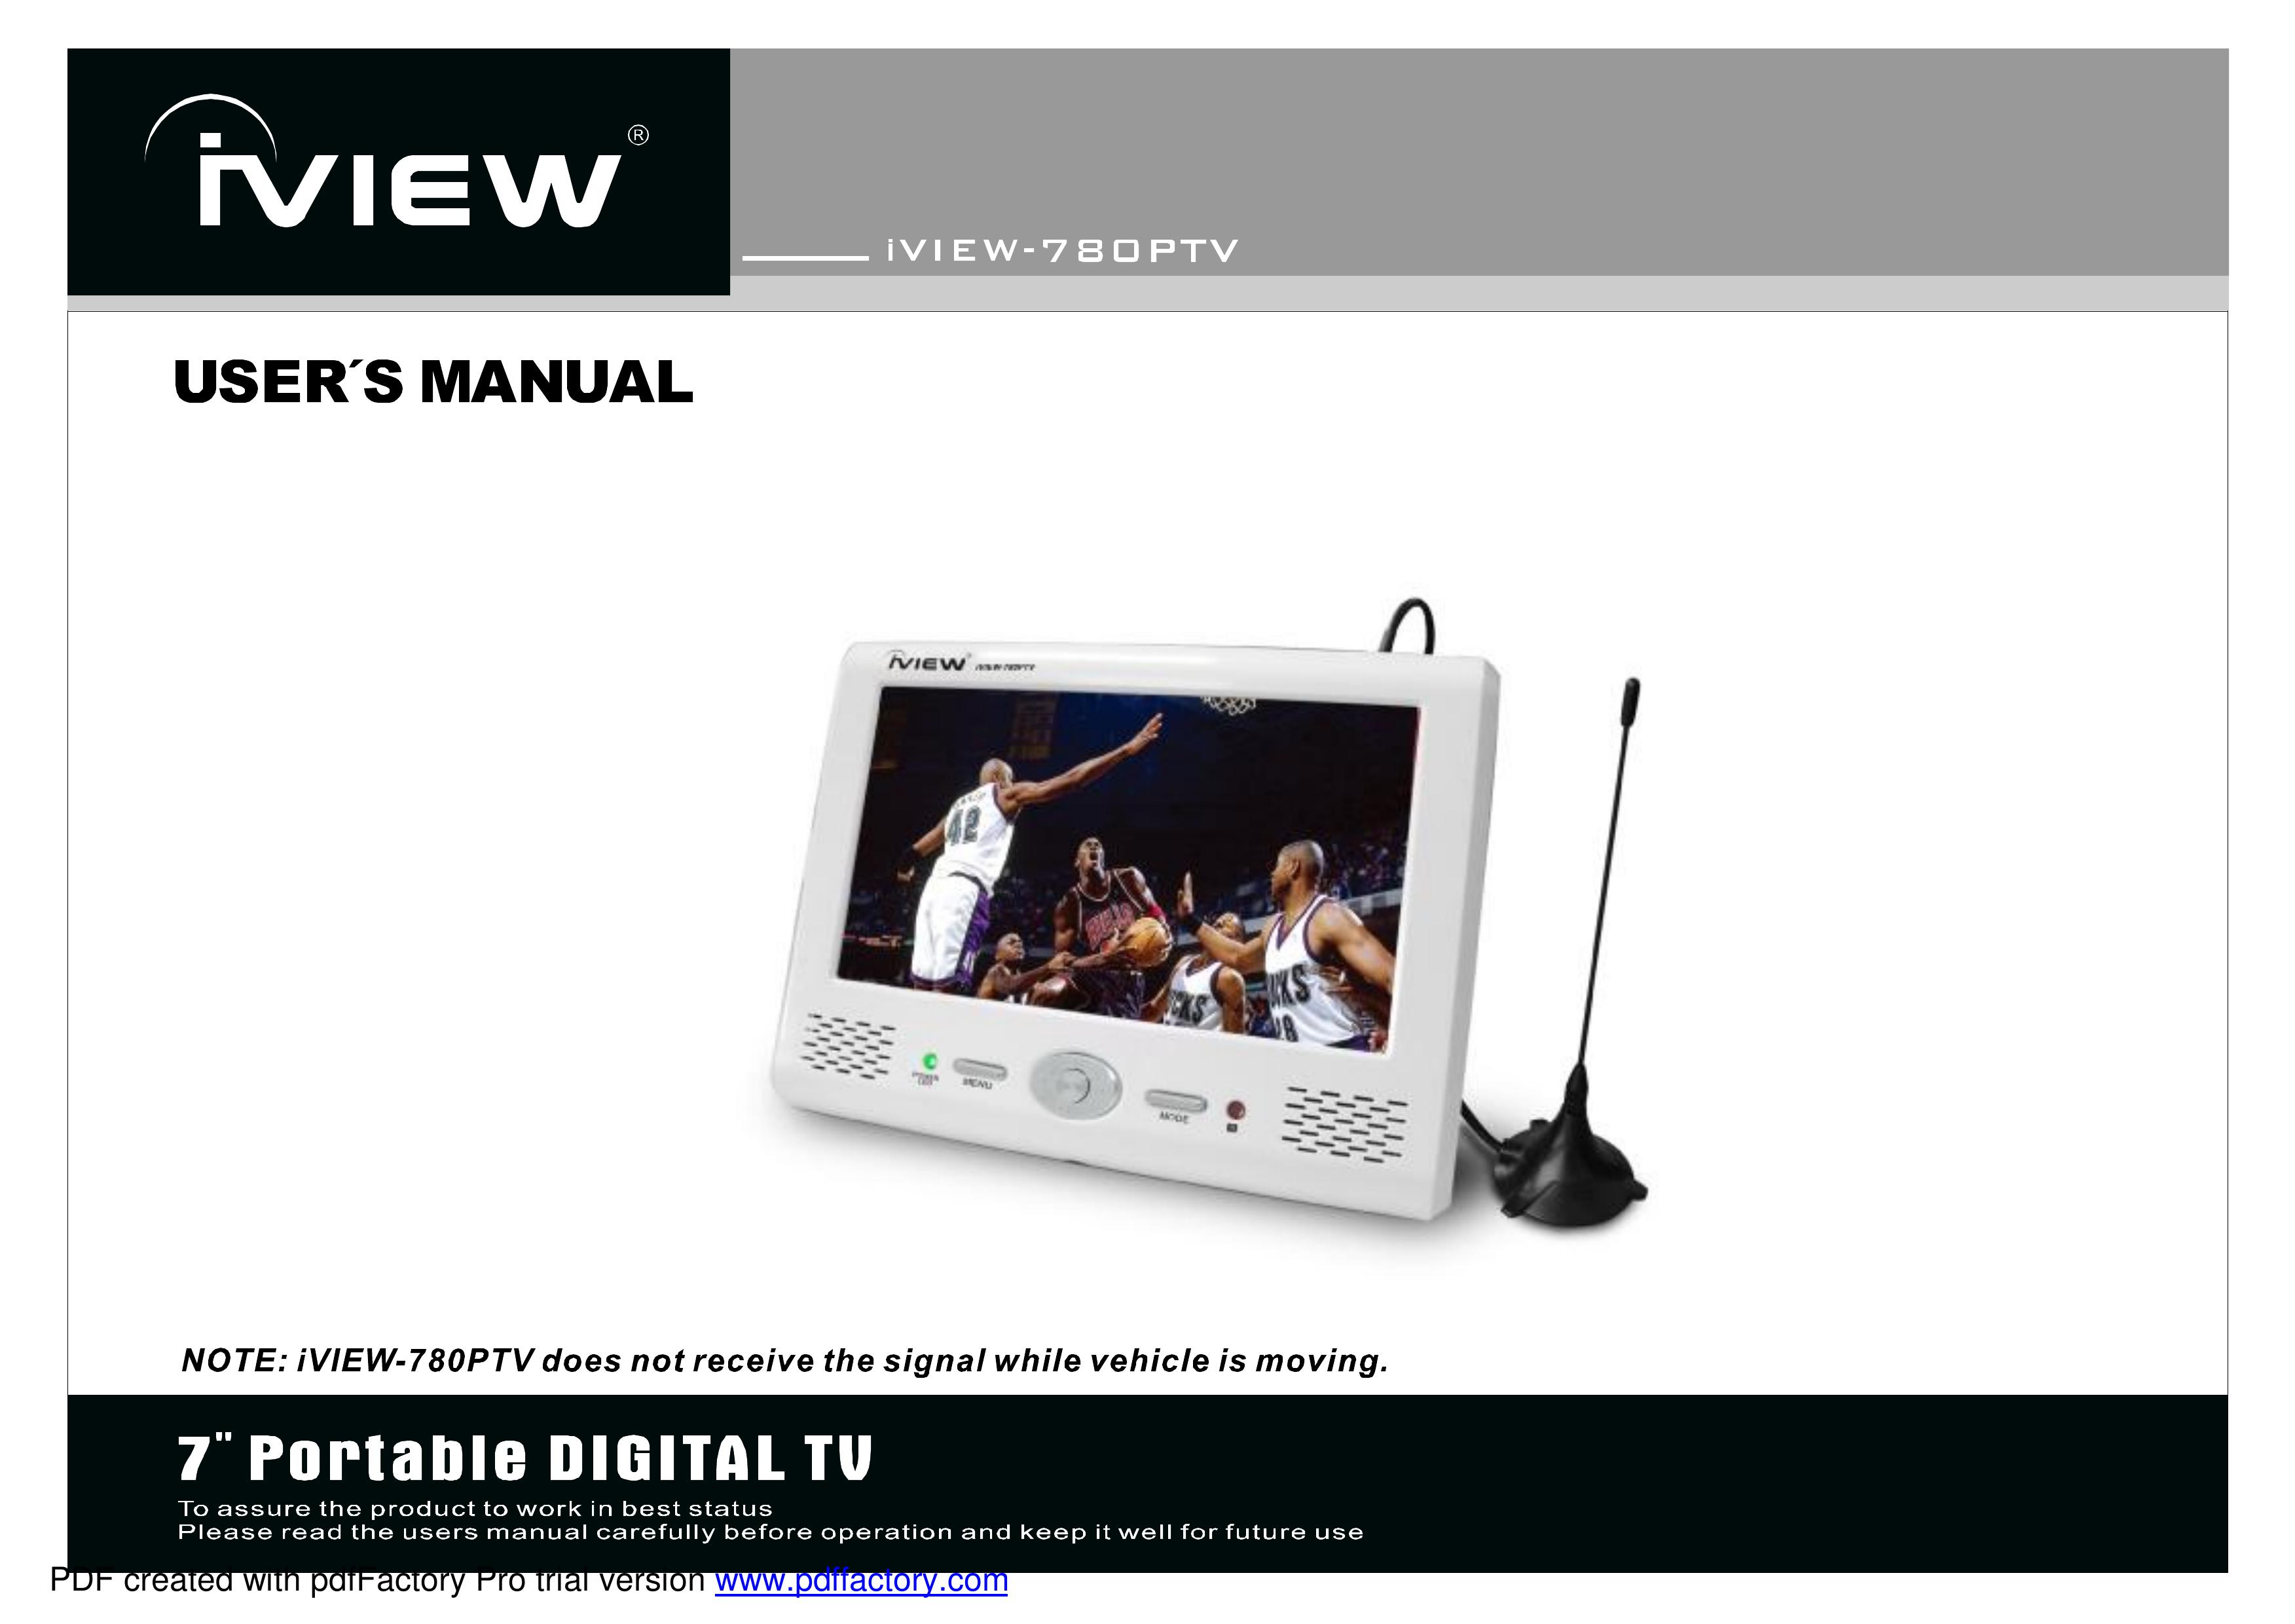 Radio Shack 780PTV Handheld TV User Manual